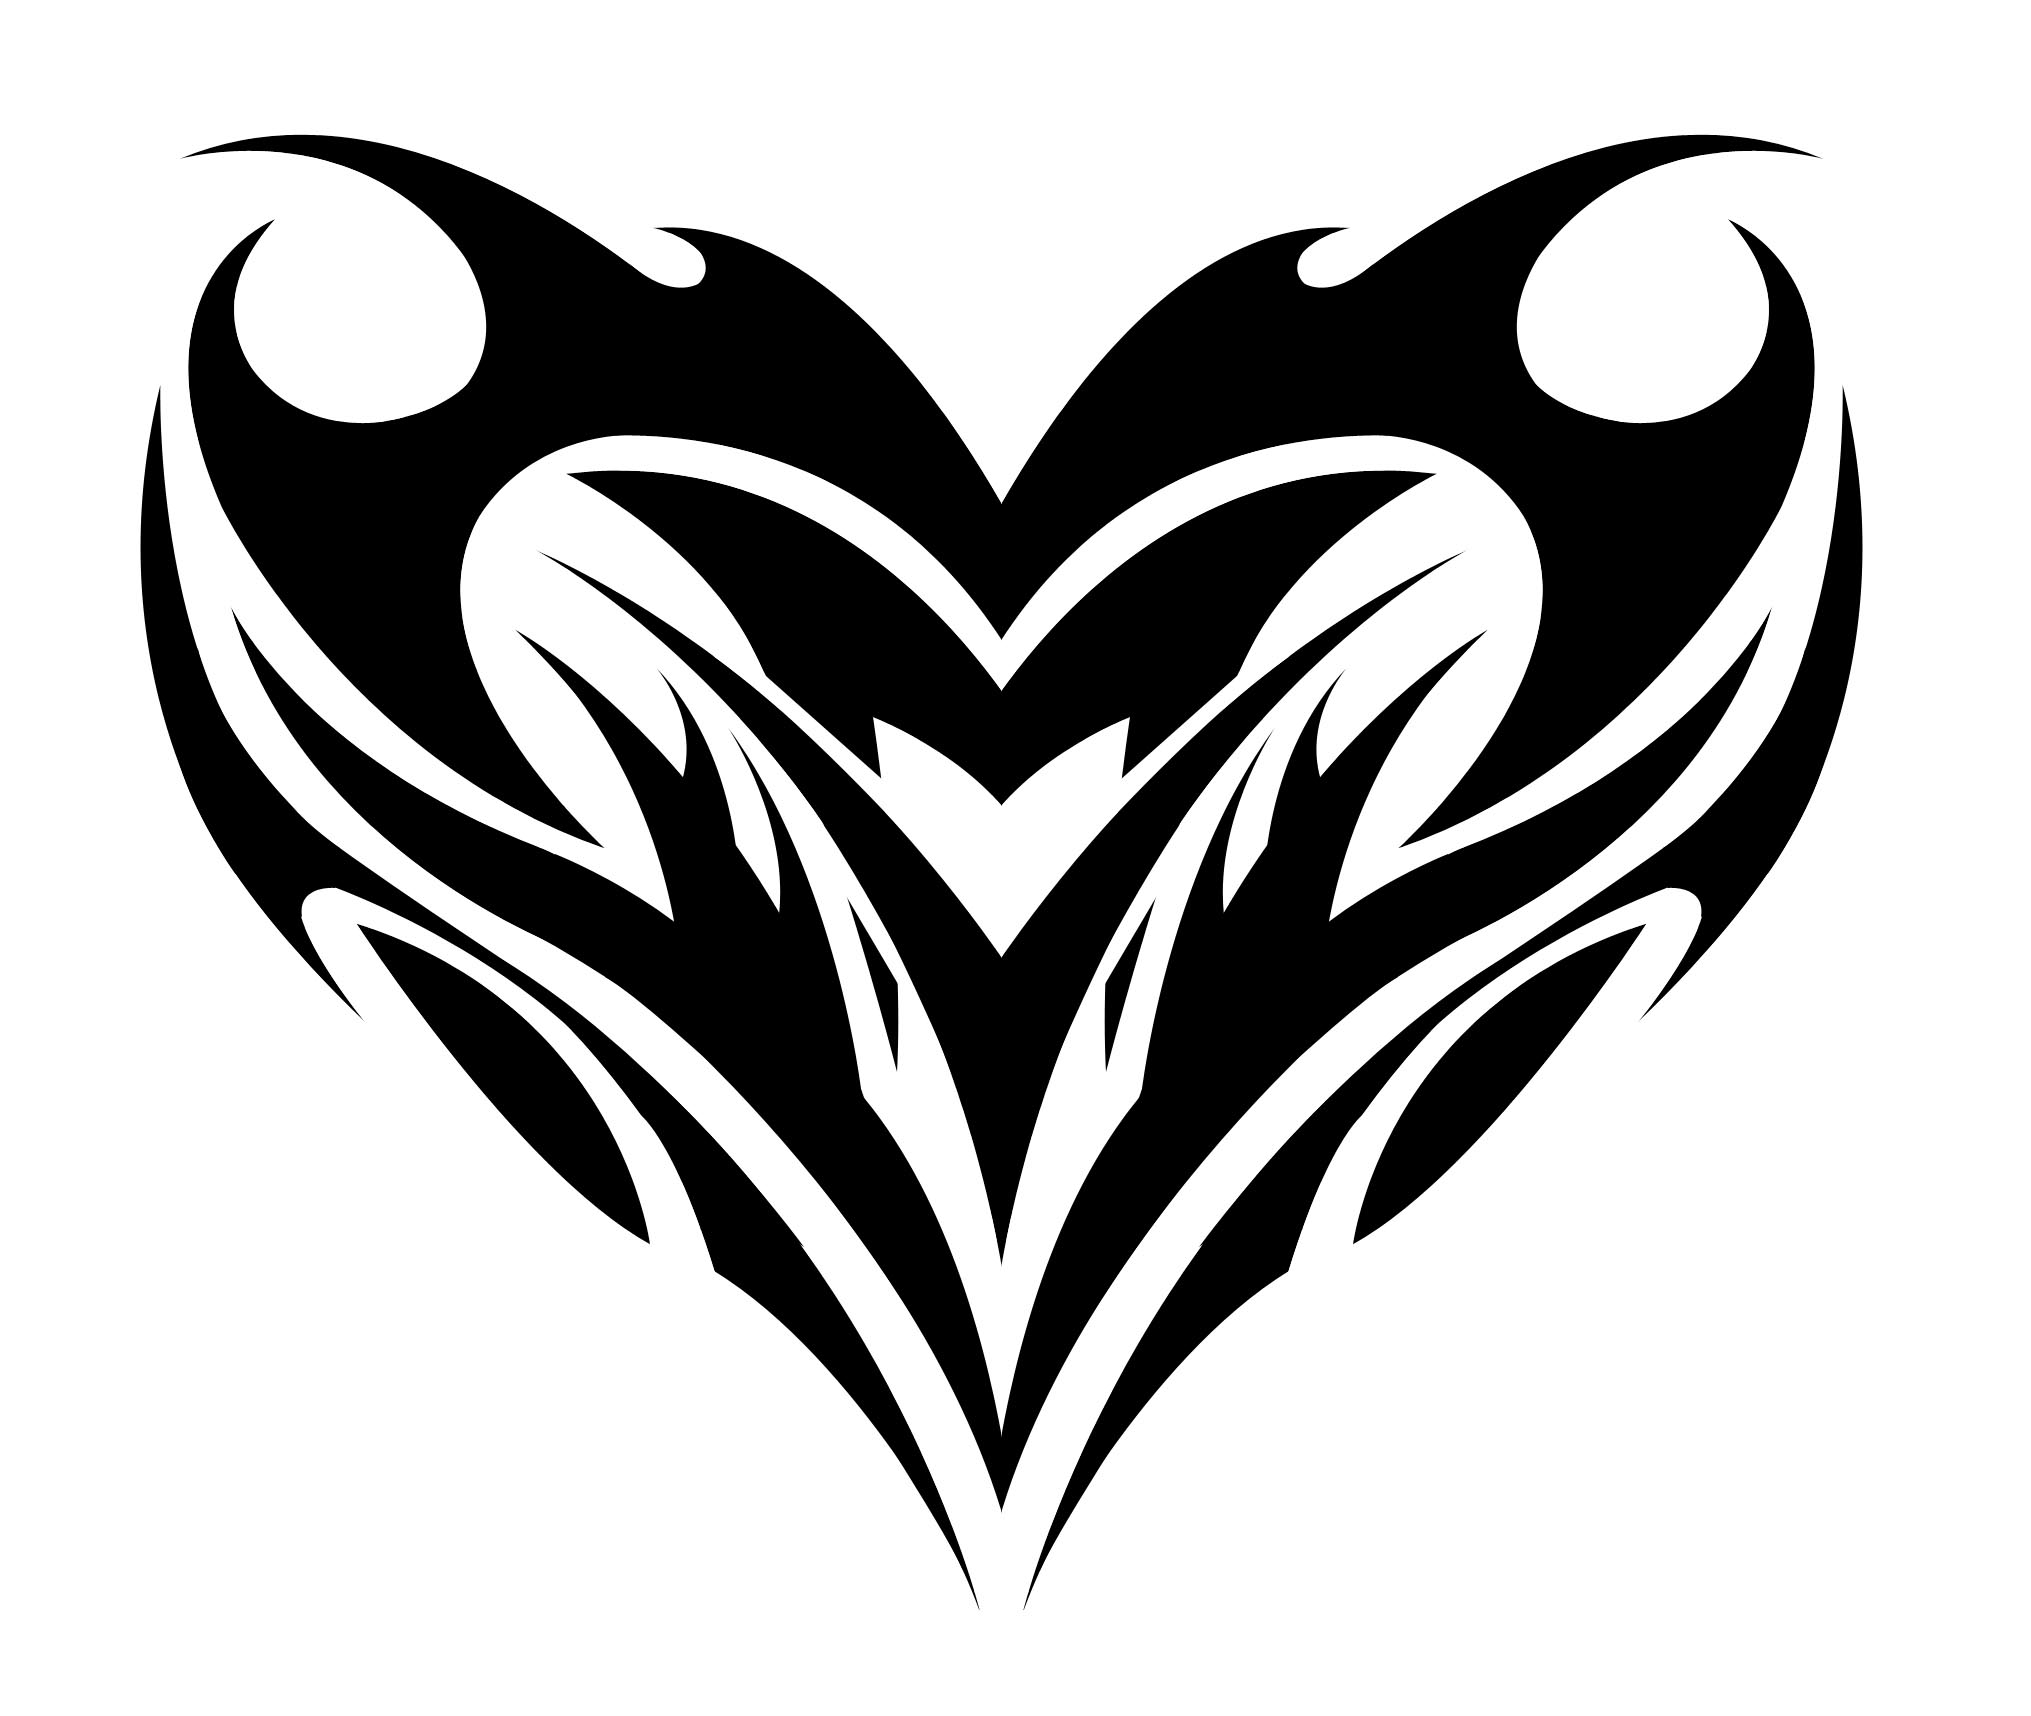 Tribal Star Tattoos Designstribal Heart Tattoos Designs And Ideas